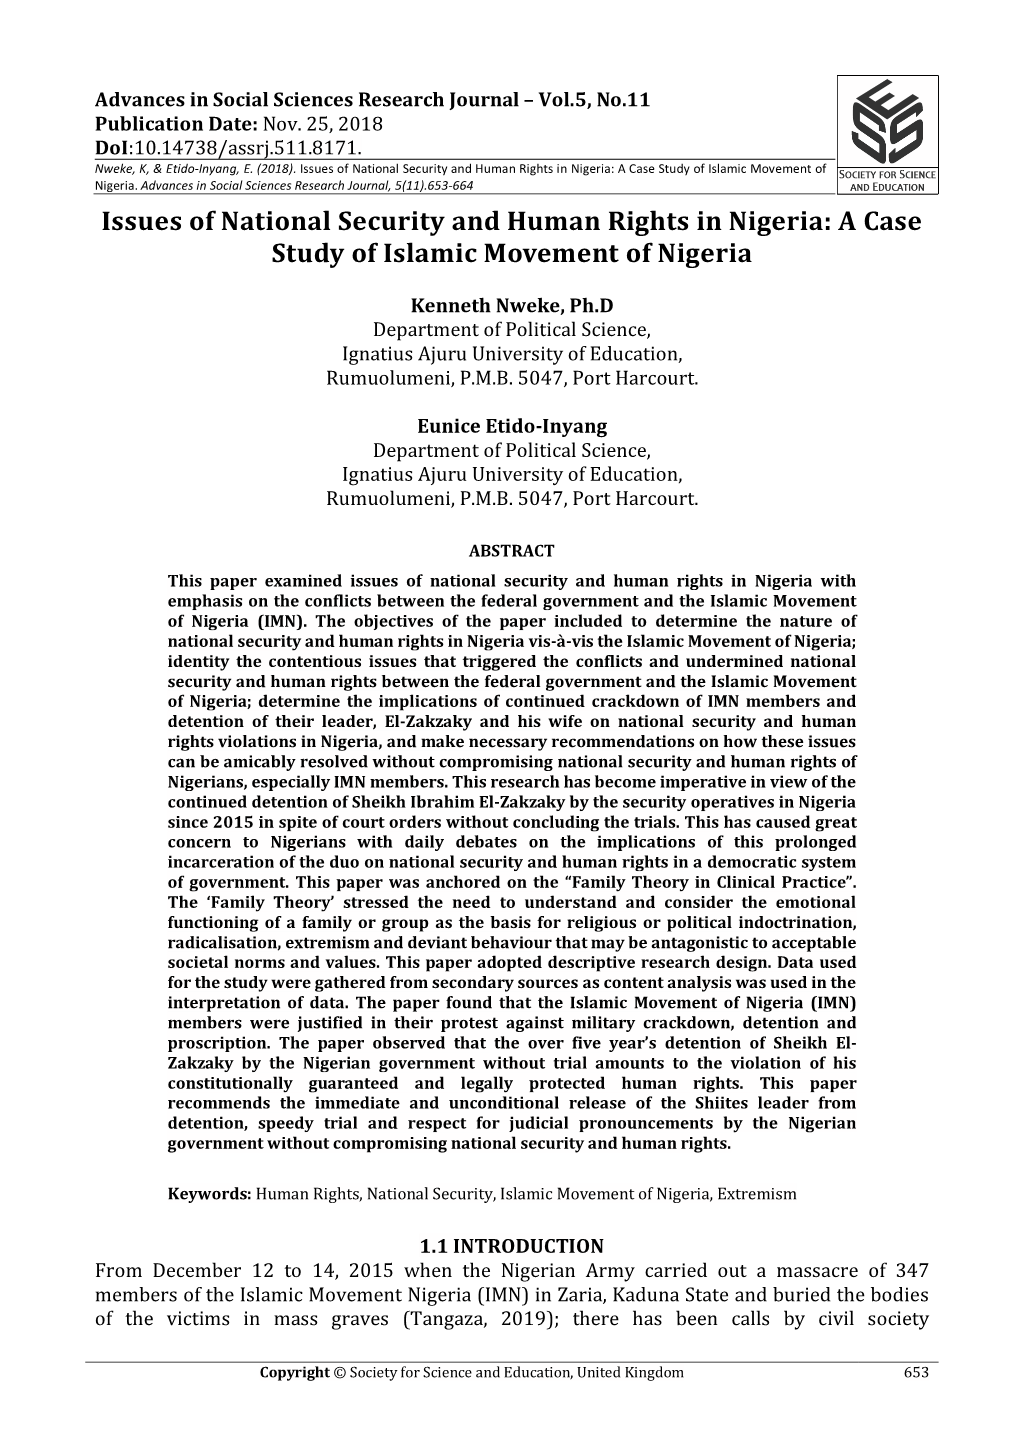 A Case Study of Islamic Movement of Nigeria